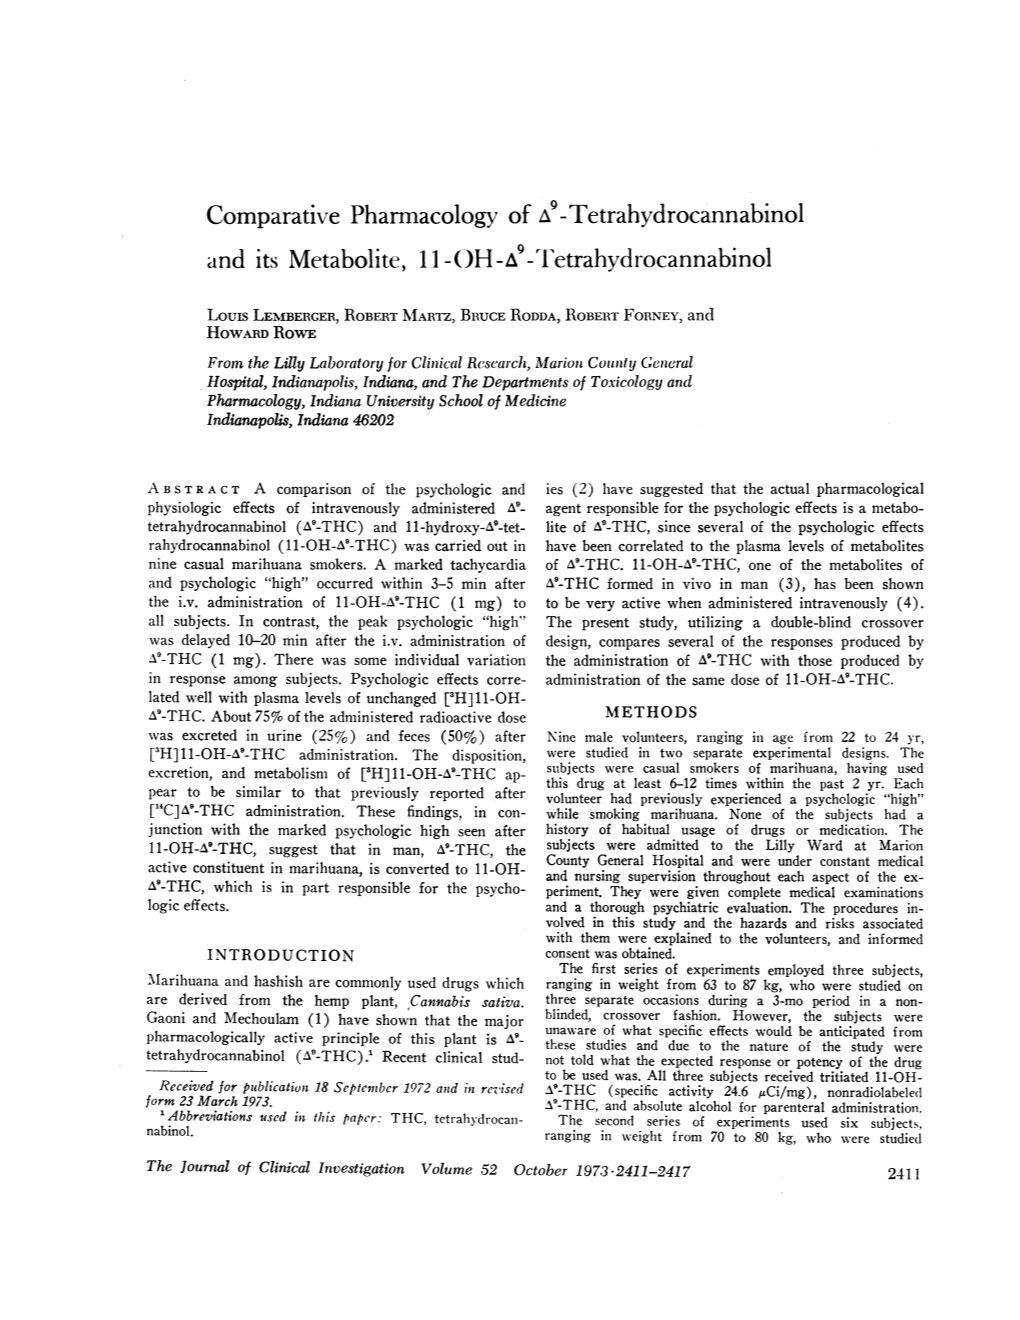 Comparative Pharmacology of Δ9-Tetrahydrocannabinol and Its